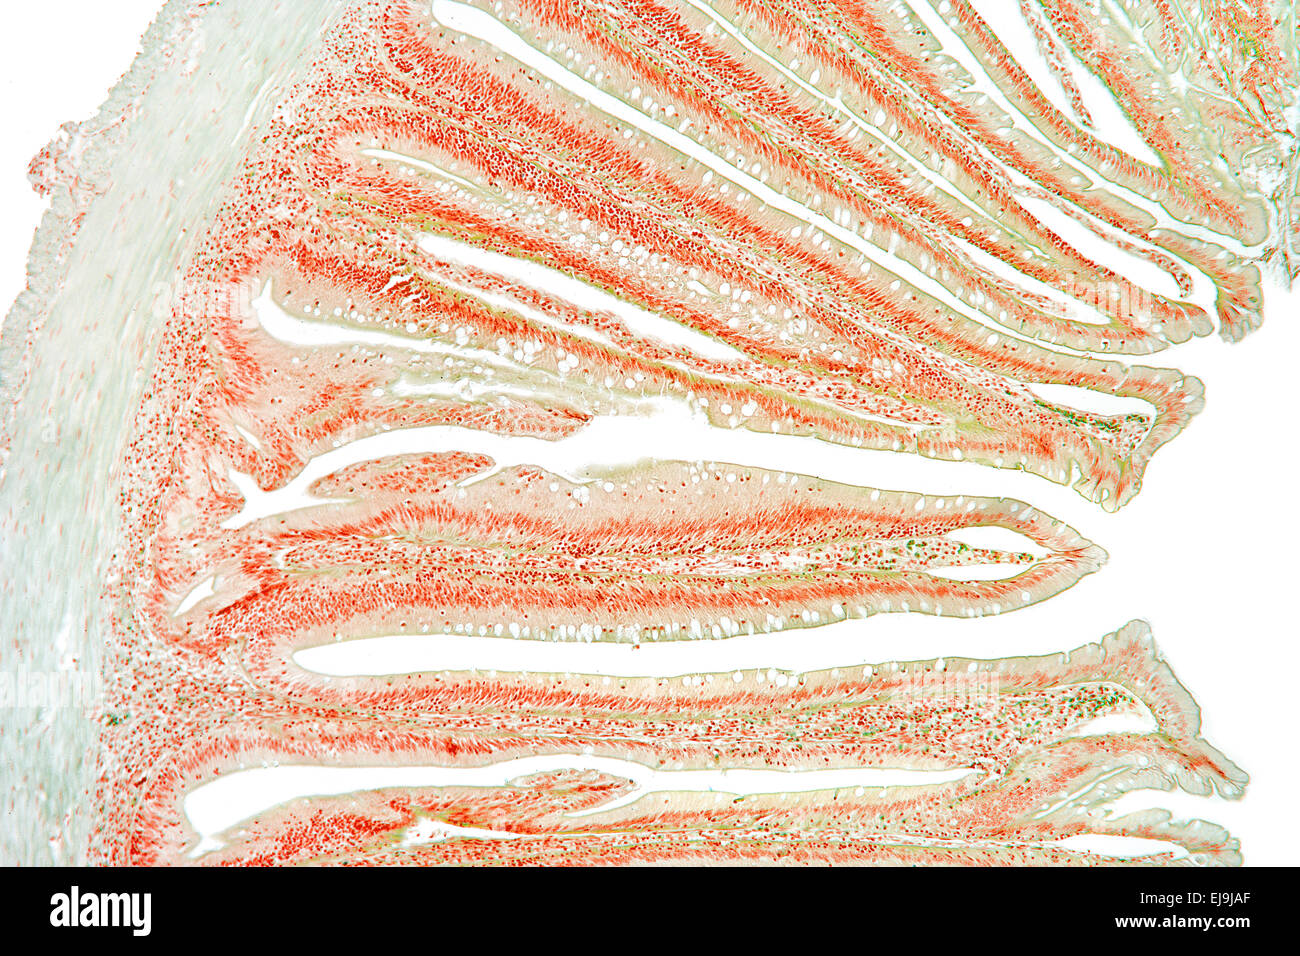 Rudd fish intestine villi brightfield photomicrograph Stock Photo